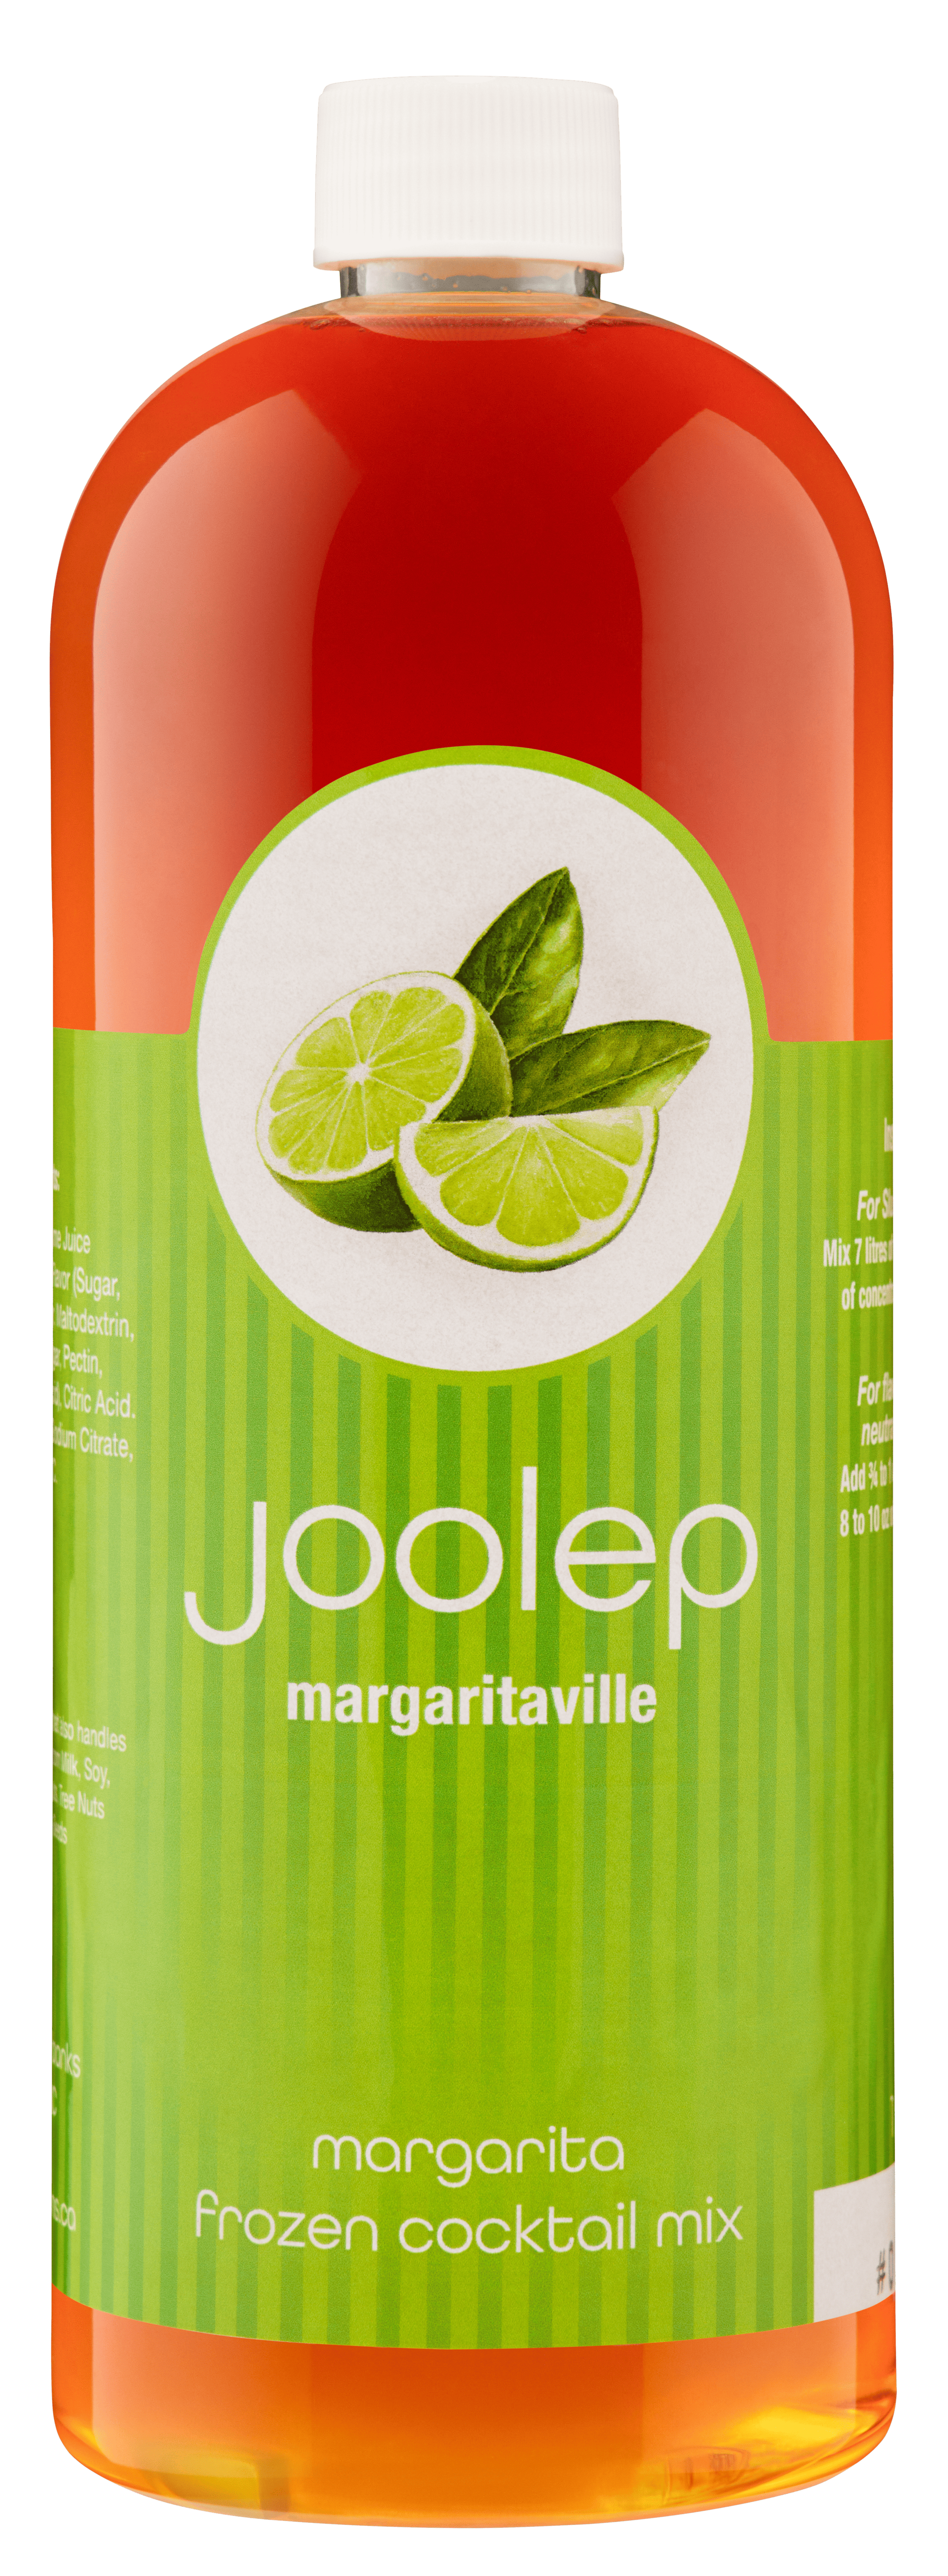 Joolep Cocktail Mix - Margaritaville Lime - 6x1L - Item#13307